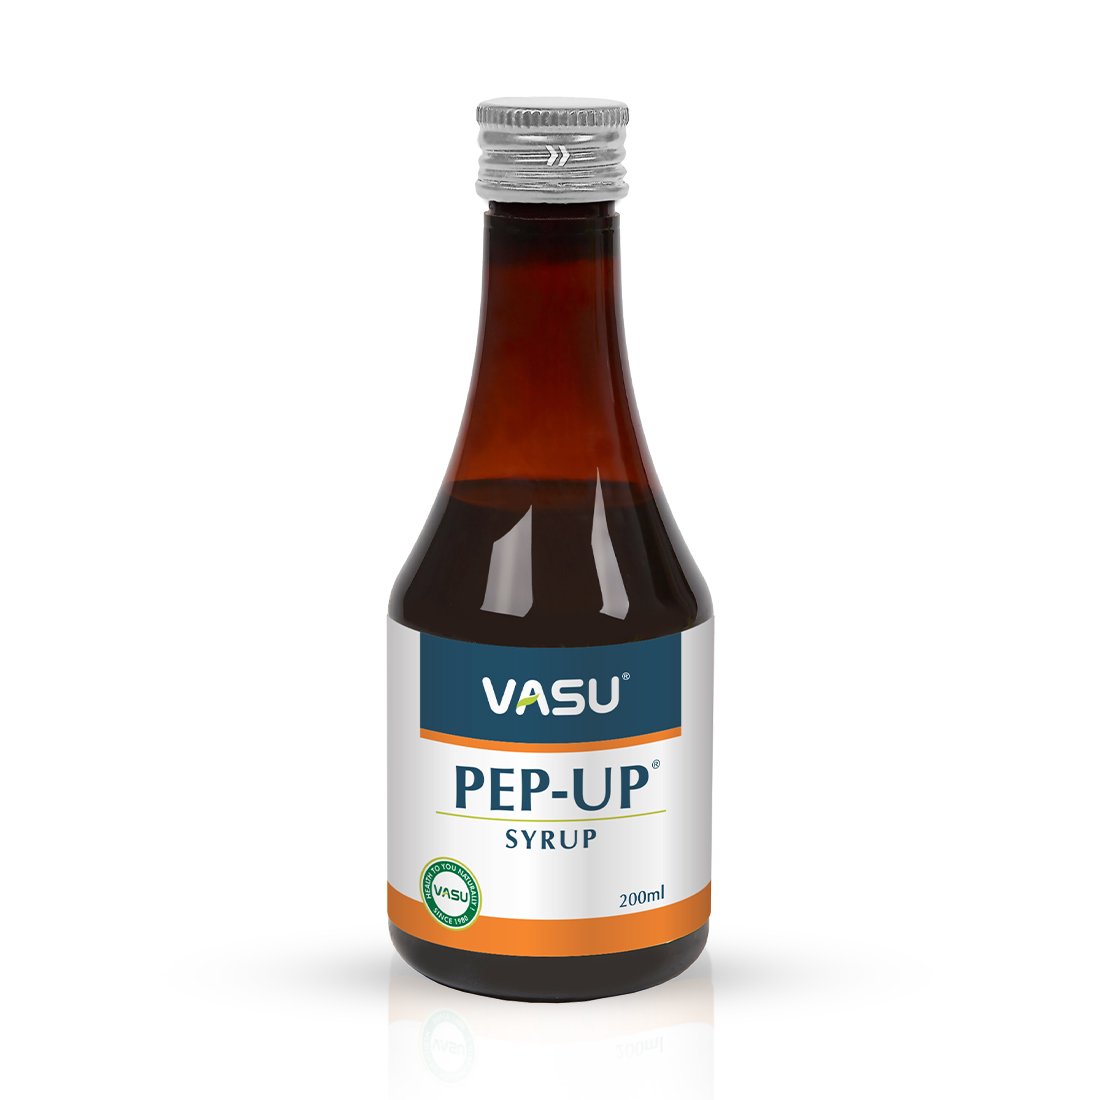 Buy Vasu Pep-Up Syrup at Best Price Online